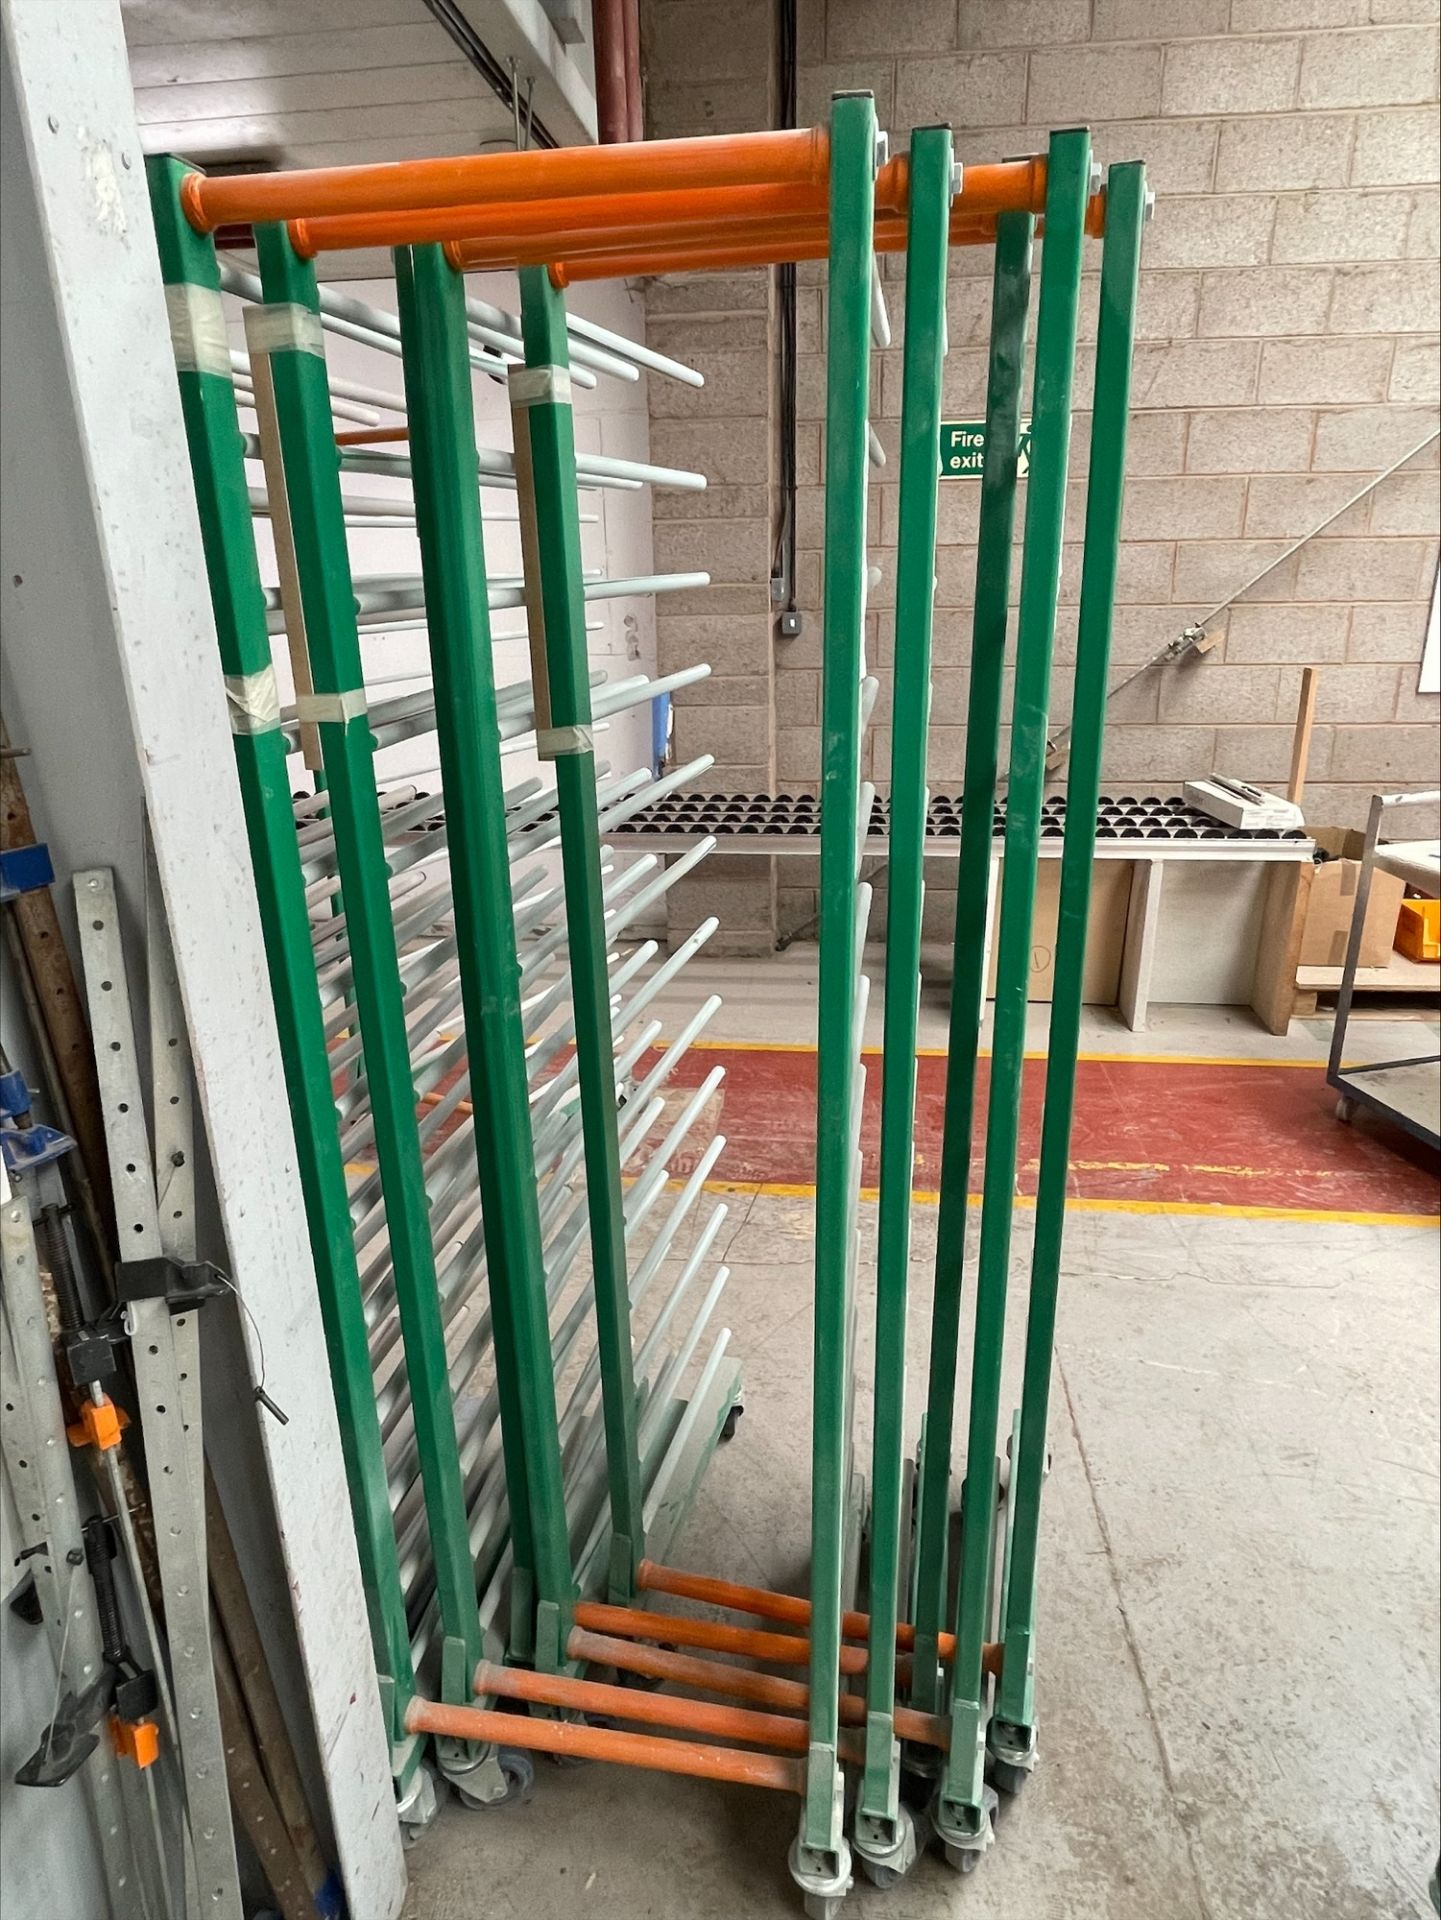 5x Gibbs Sandtech 13 bar standard spray drying racks, 13 bars per upright, max. load per pair of - Image 3 of 3